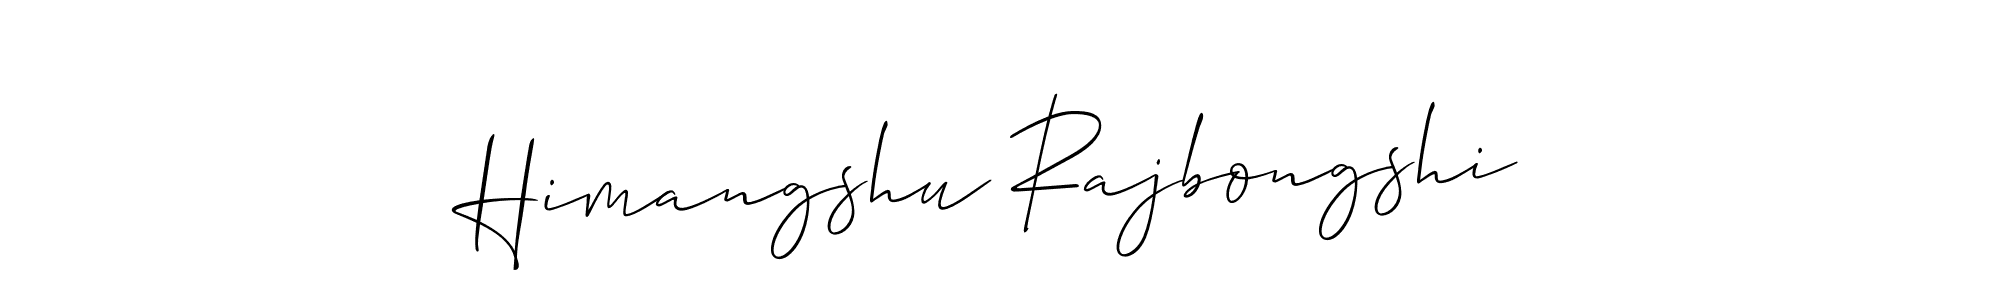 How to Draw Himangshu Rajbongshi signature style? Allison_Script is a latest design signature styles for name Himangshu Rajbongshi. Himangshu Rajbongshi signature style 2 images and pictures png